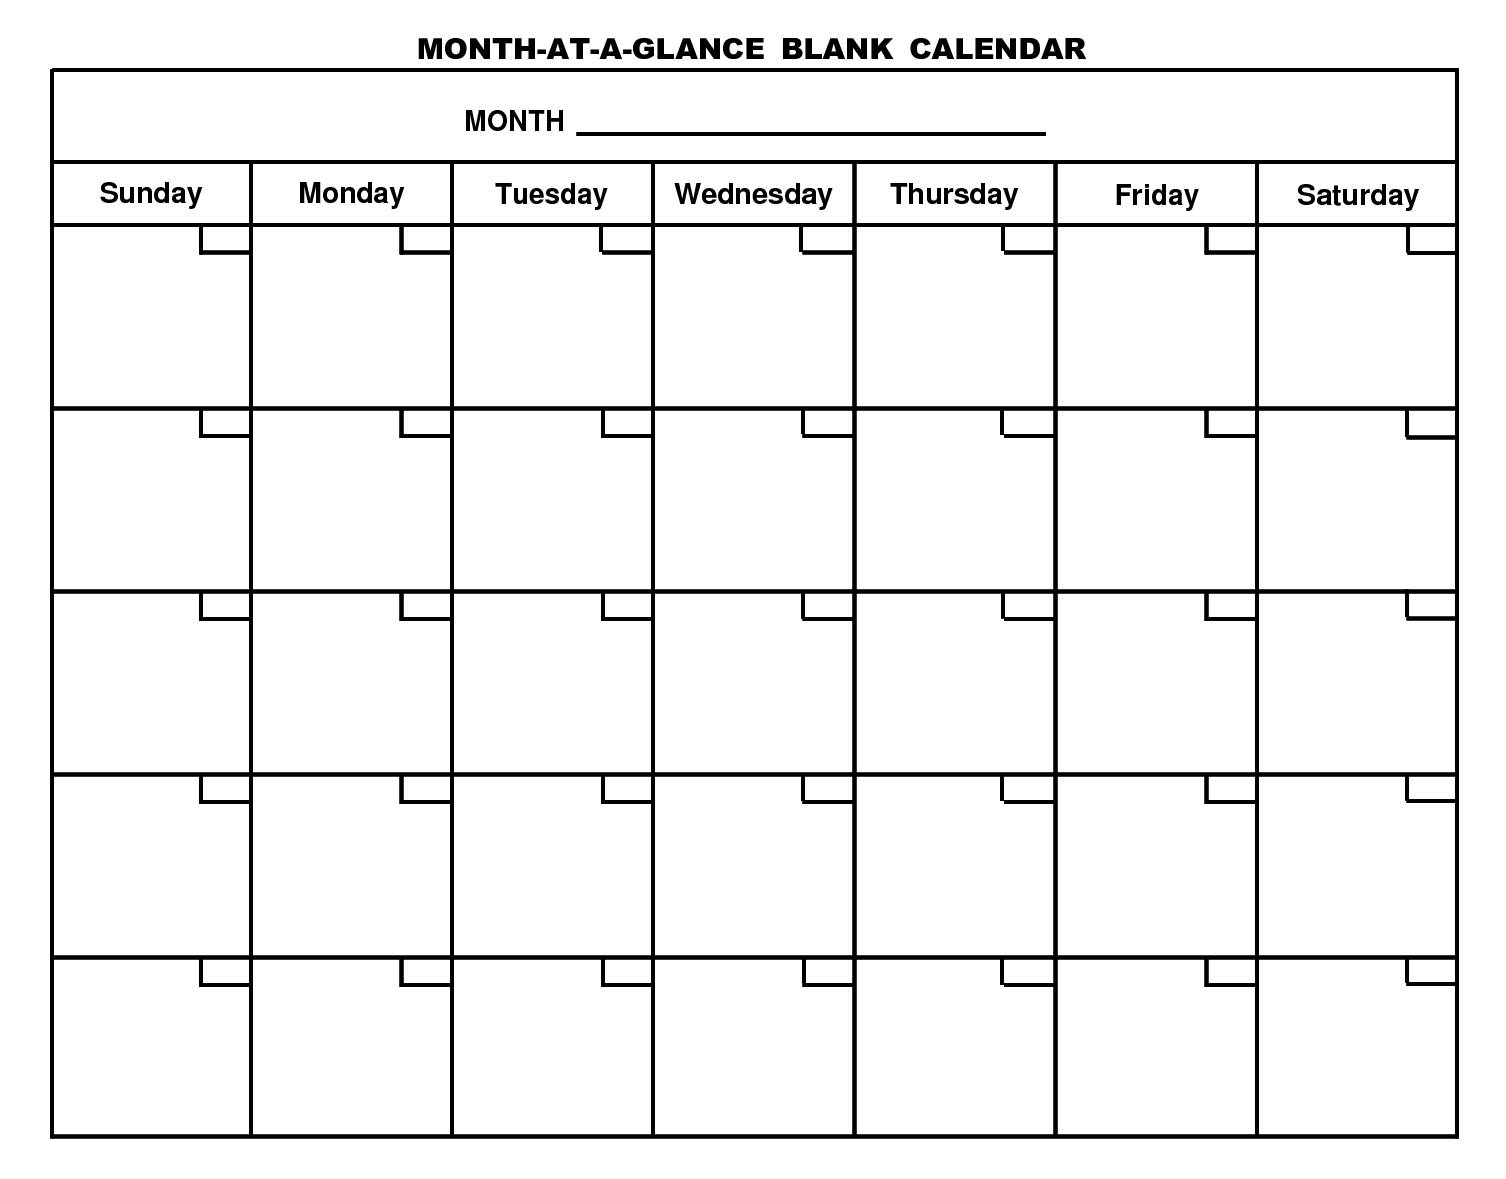 Pinstacy Tangren On Work | Printable Blank Calendar Inside Month At A Glance Blank Calendar Template